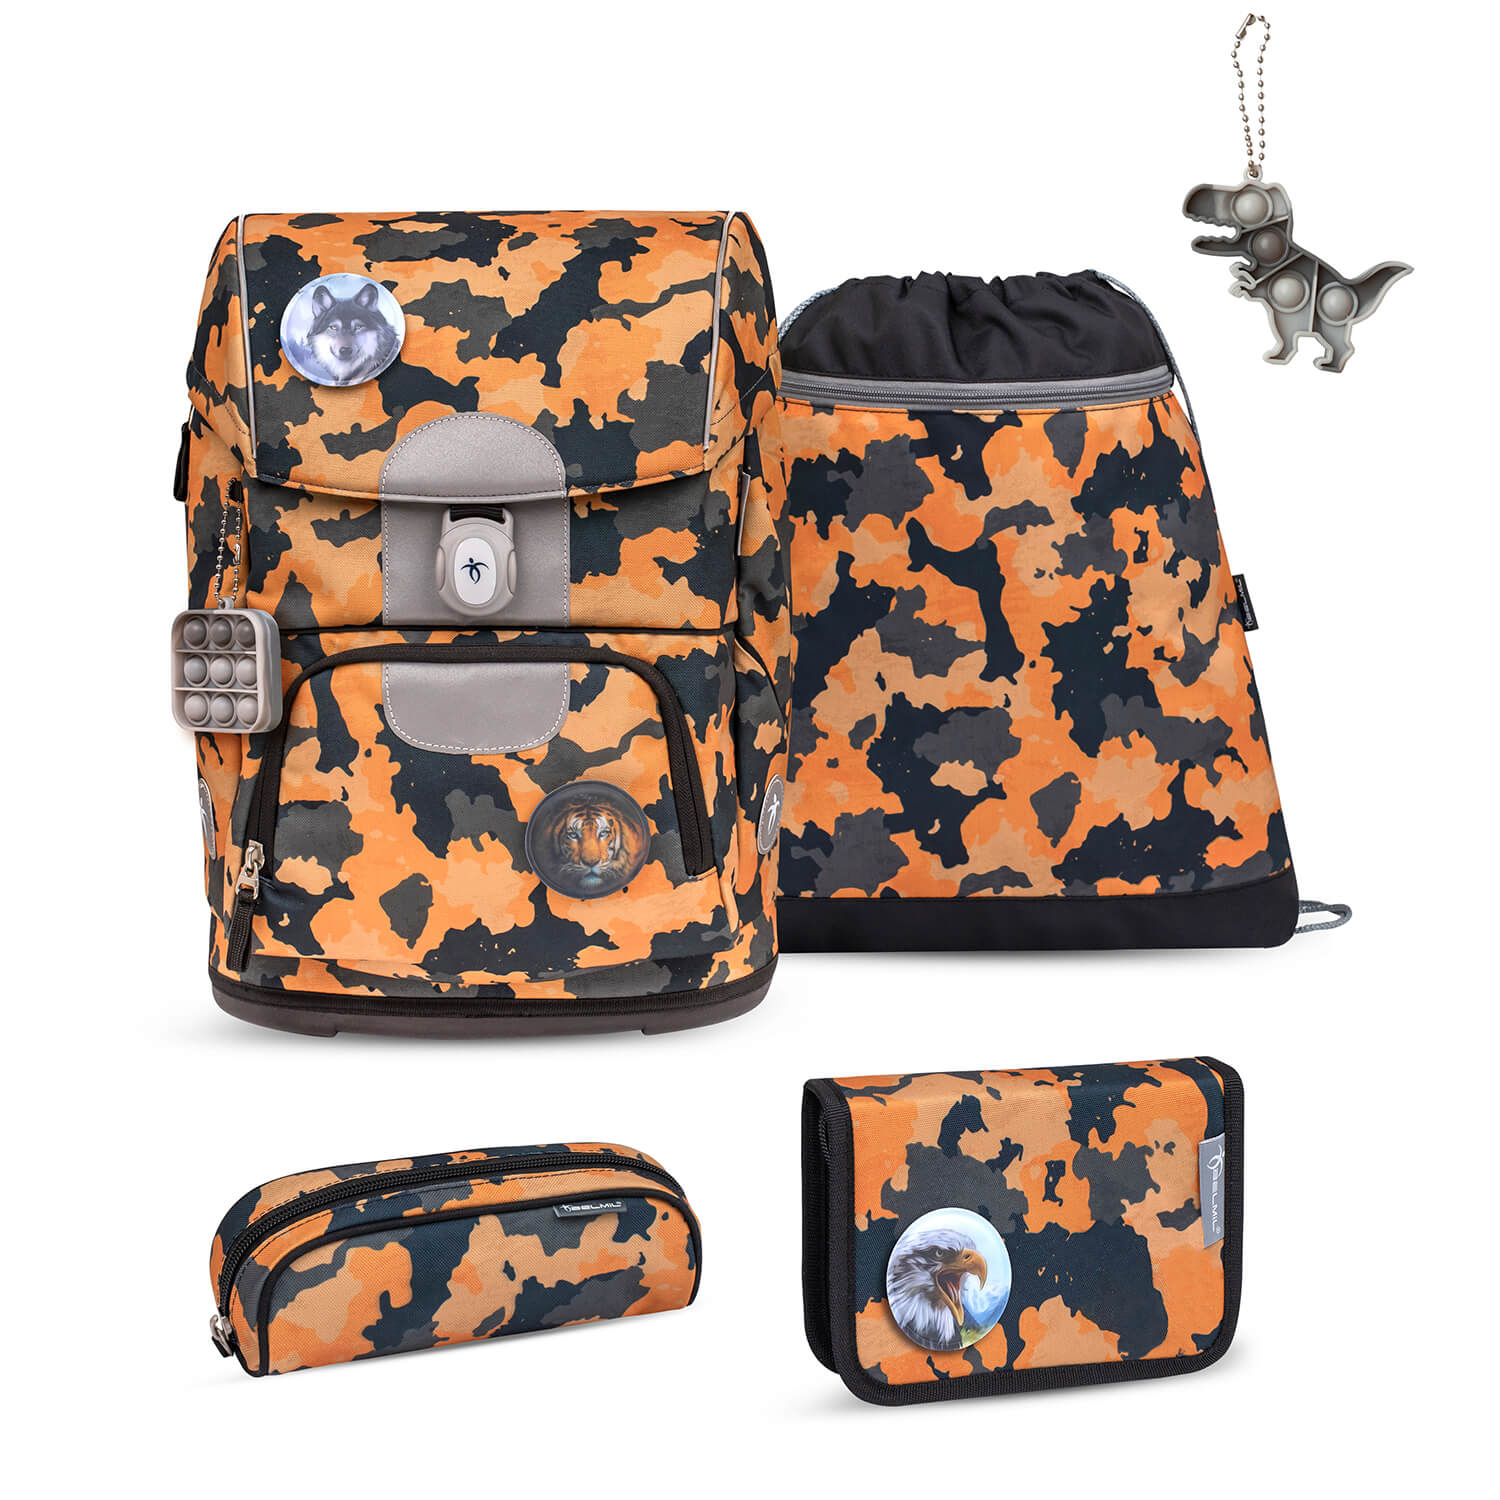 Motion Orange Camouflage schoolbag set 6 pcs with GRATIS keychain